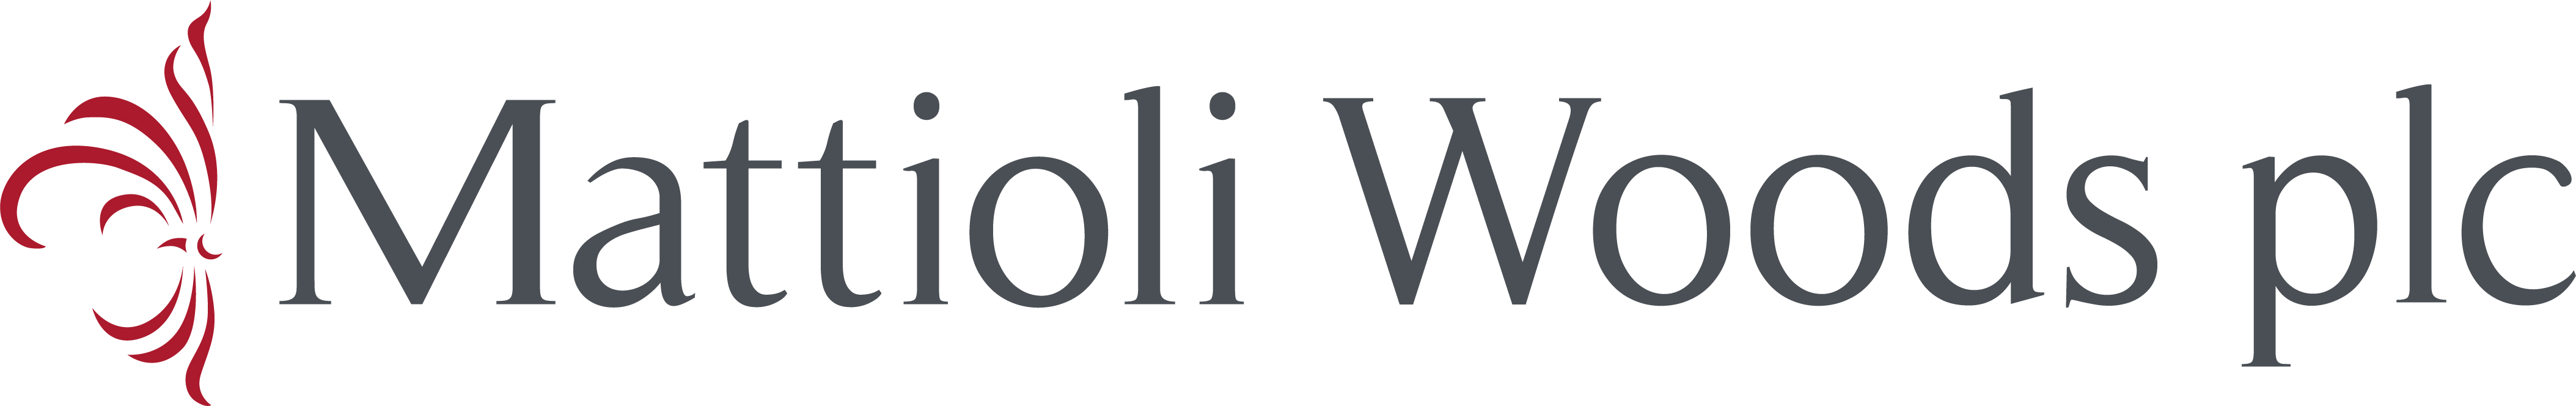 Mattioli Woods plc logo